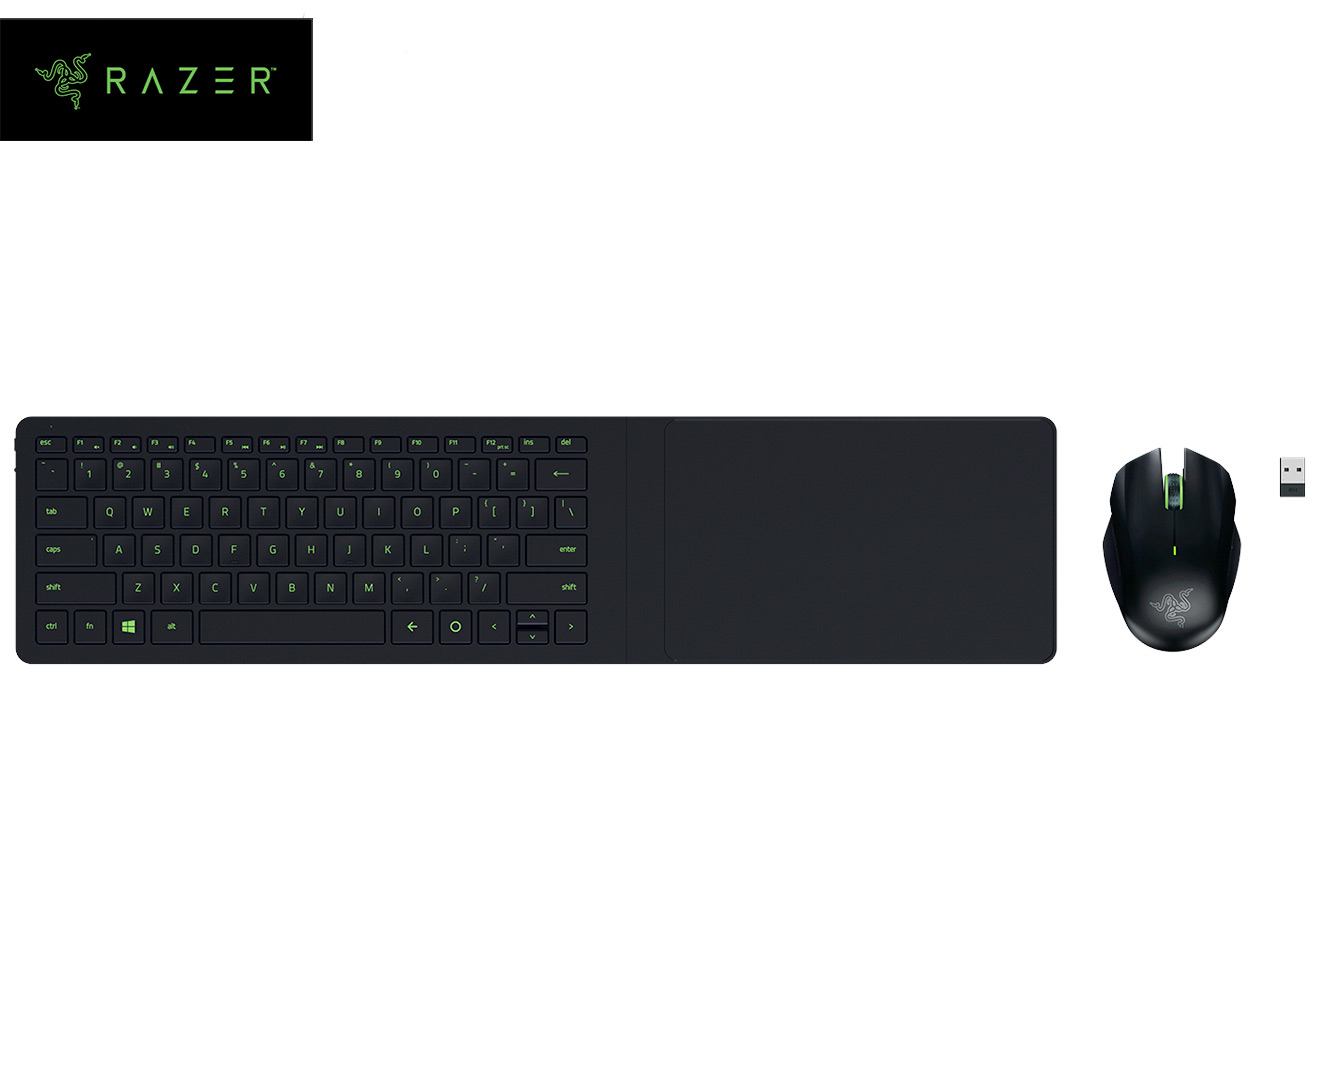 Razer Turret Living Room Gaming Mouse & Lapboard